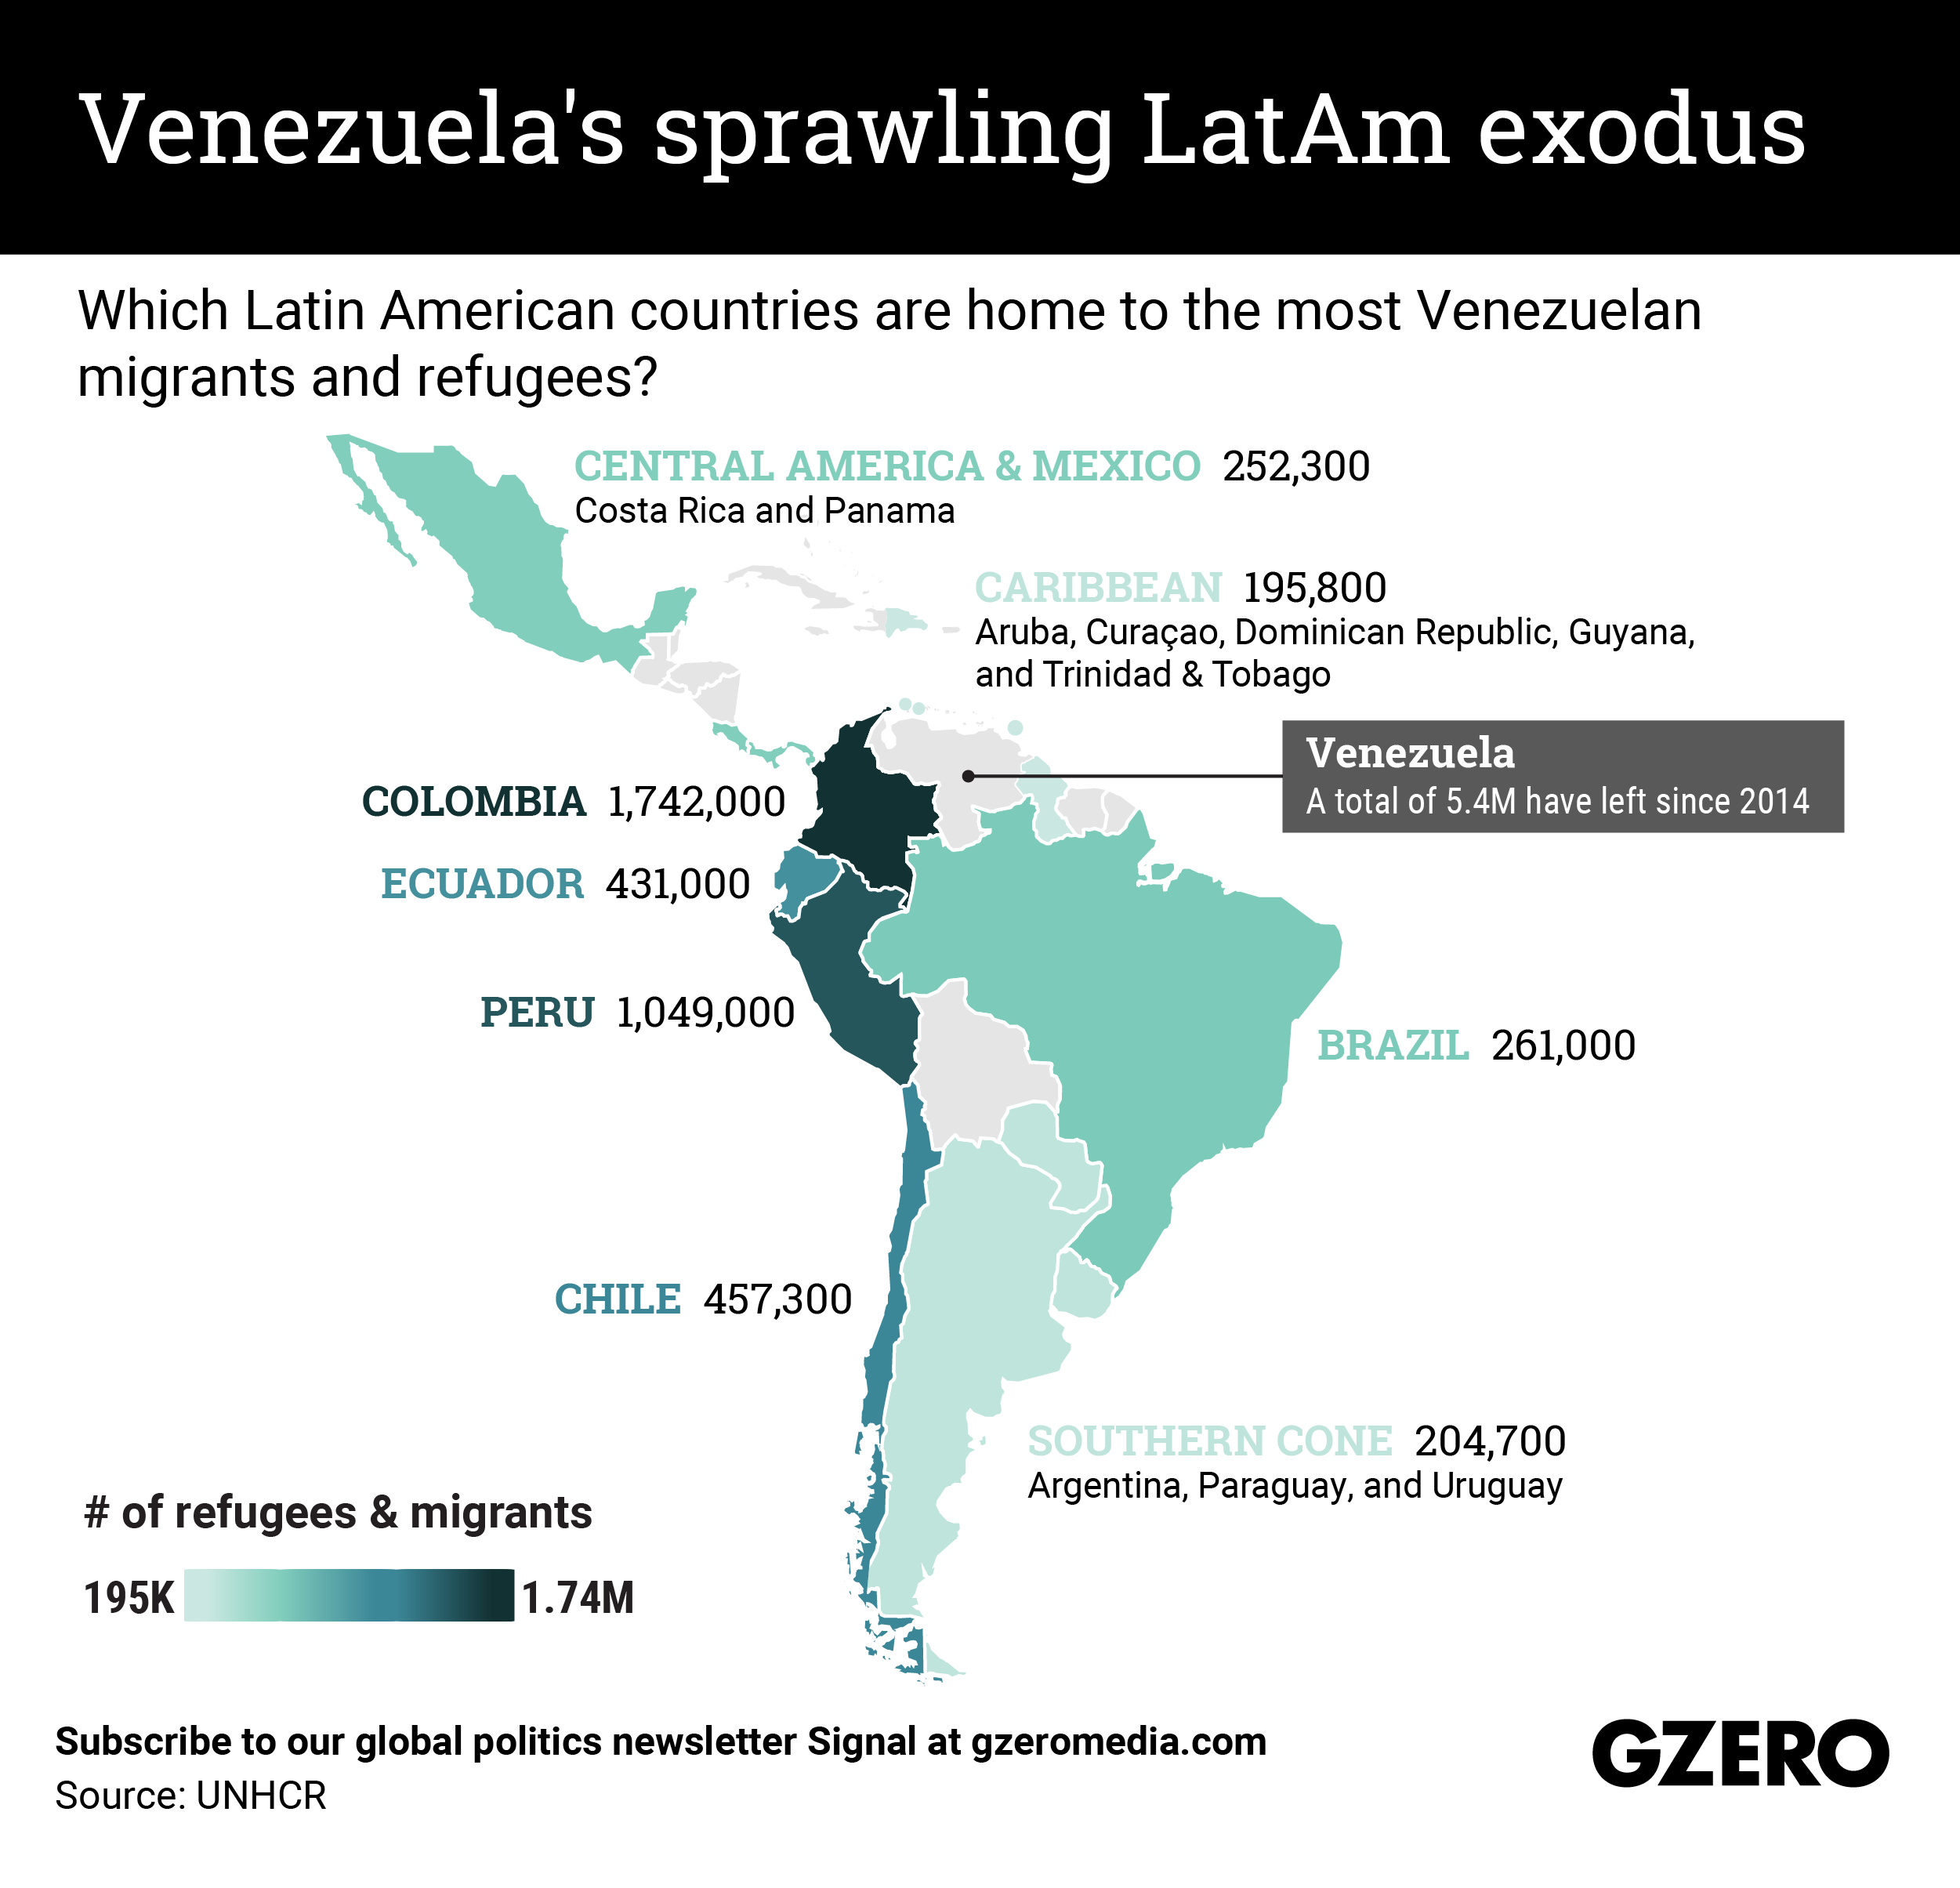 The Graphic Truth: Venezuela's sprawling LatAm exodus